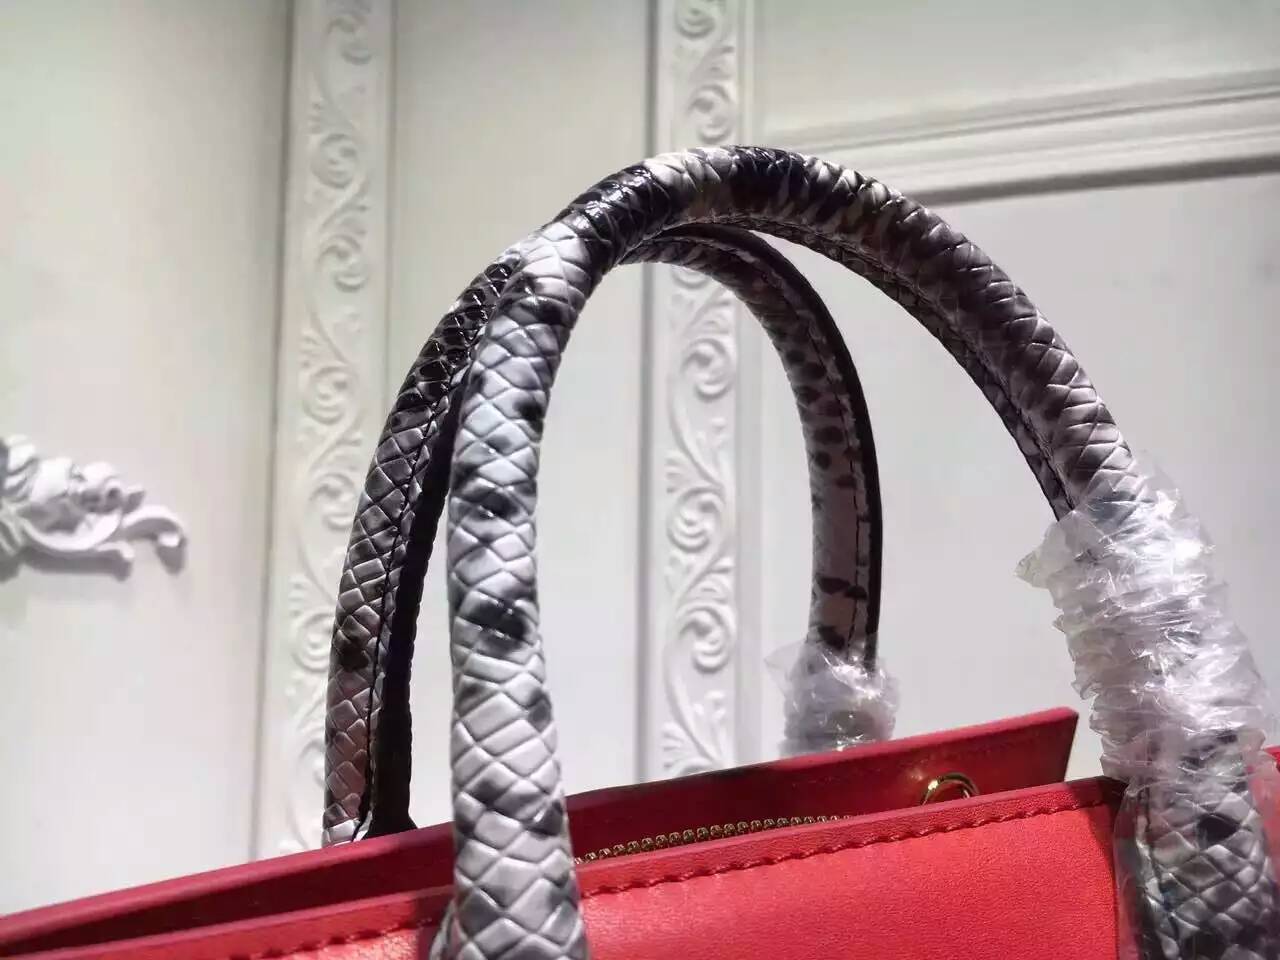 2016 New Saint Laurent Bag Cheap Sale-Saint Laurent Medium Classic Sac De Jour Bag in Red Calfskin and Python Embossed Leather - Click Image to Close